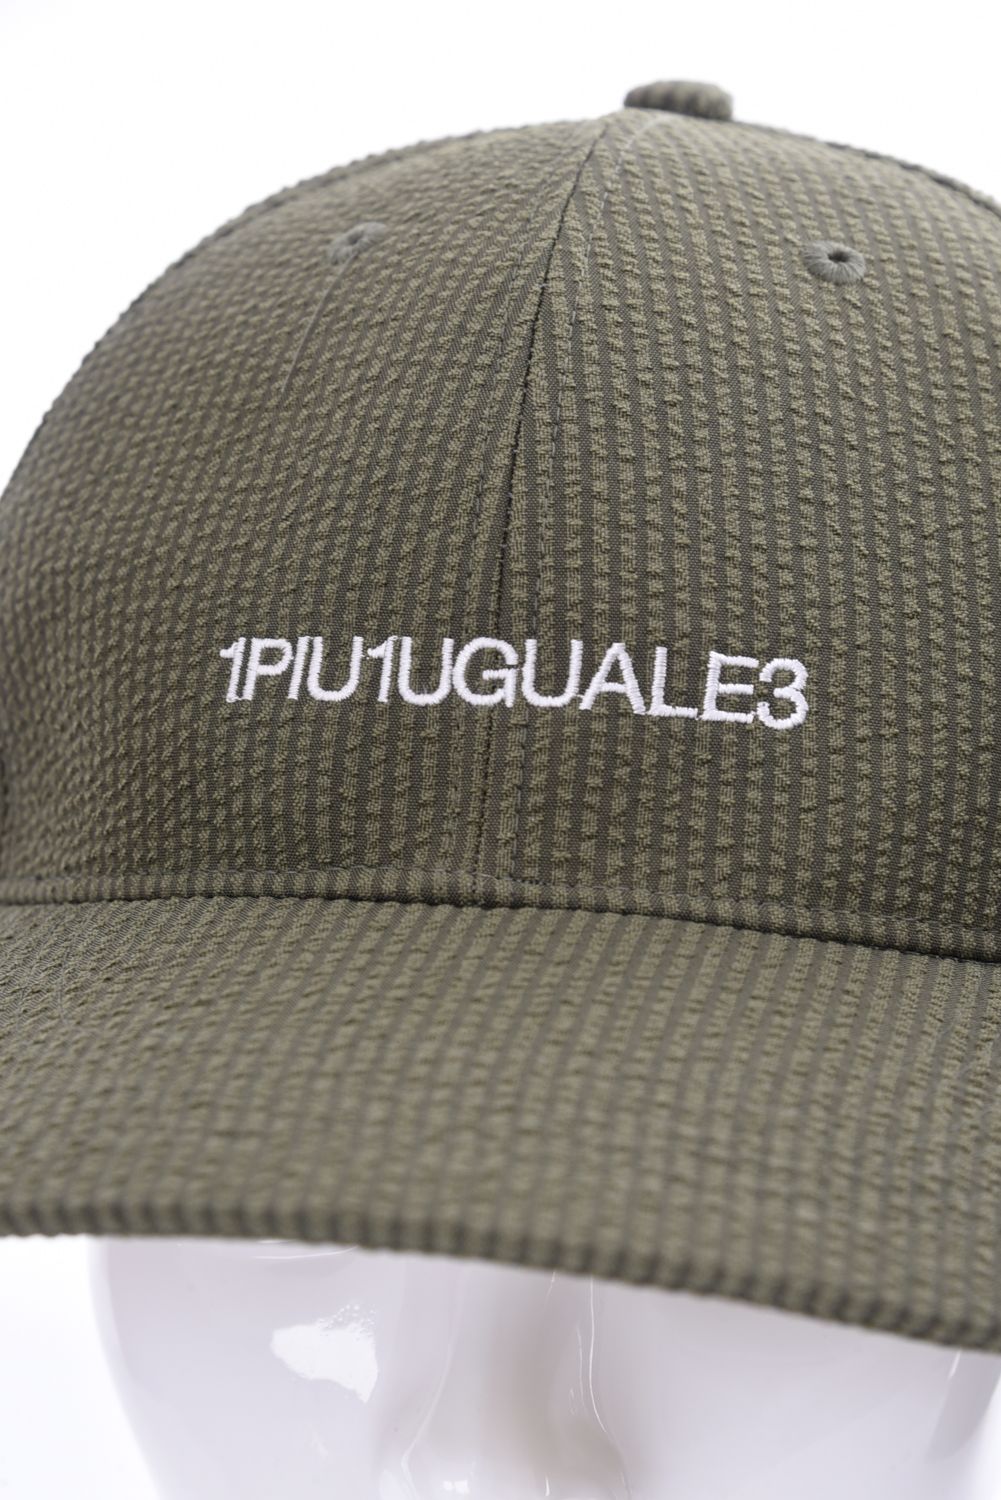 1PIU1UGUALE3 GOLF - SUCKER 6 PANEL CAP / ブランドロゴ刺繍 サッカー